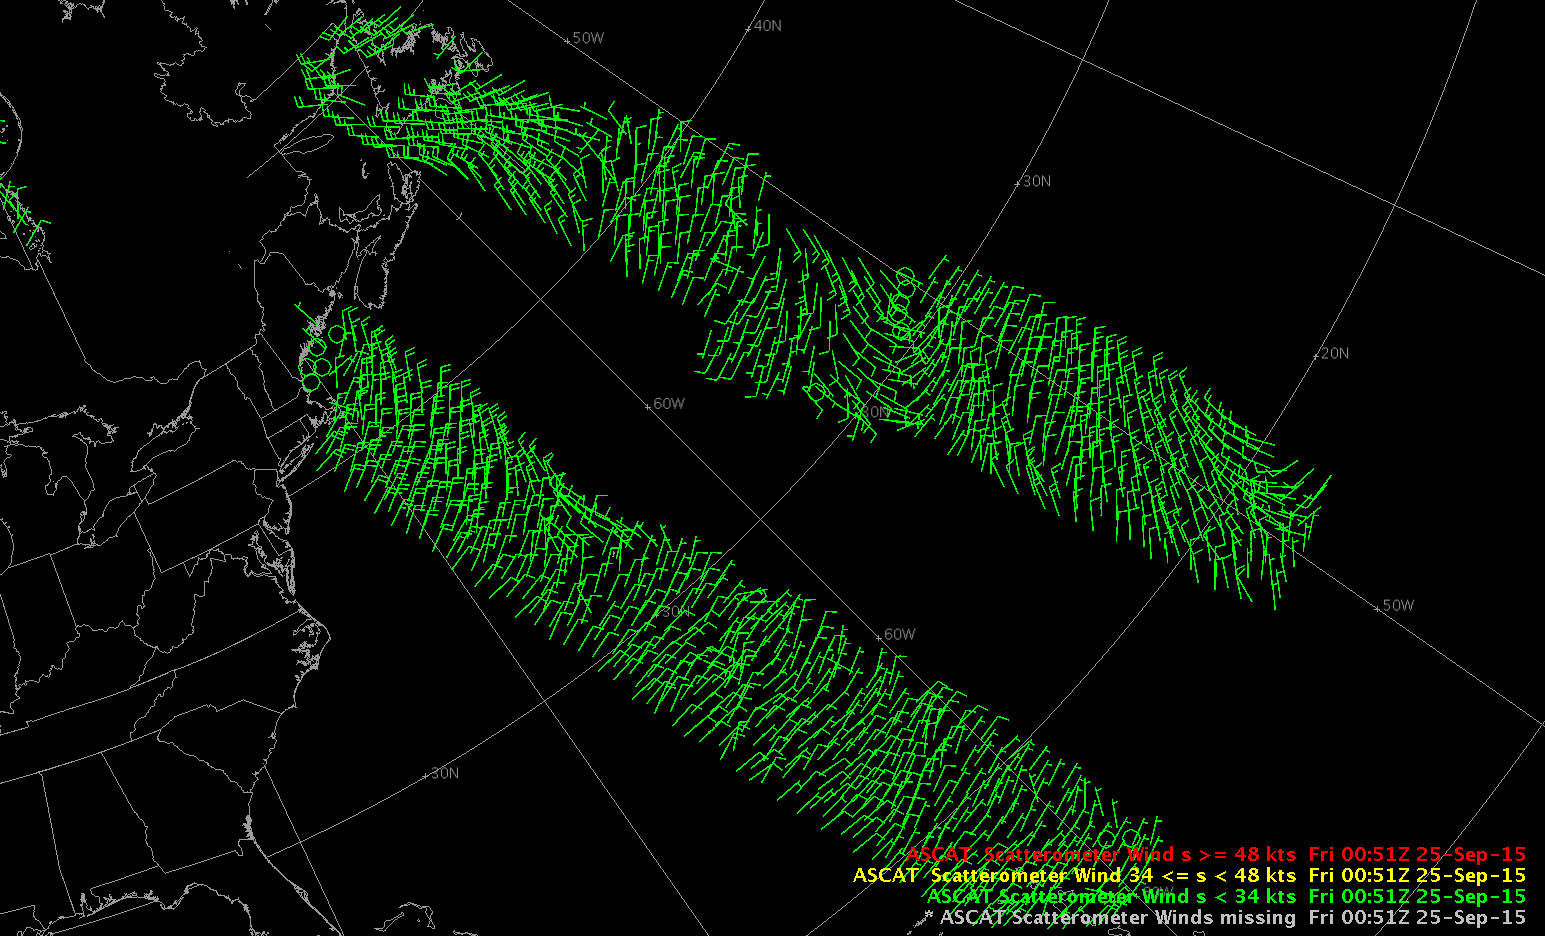 METOP-B ASCAT Scatterometer Winds, 0000-1500 UTC over the western Atlantic [click to enlarge]